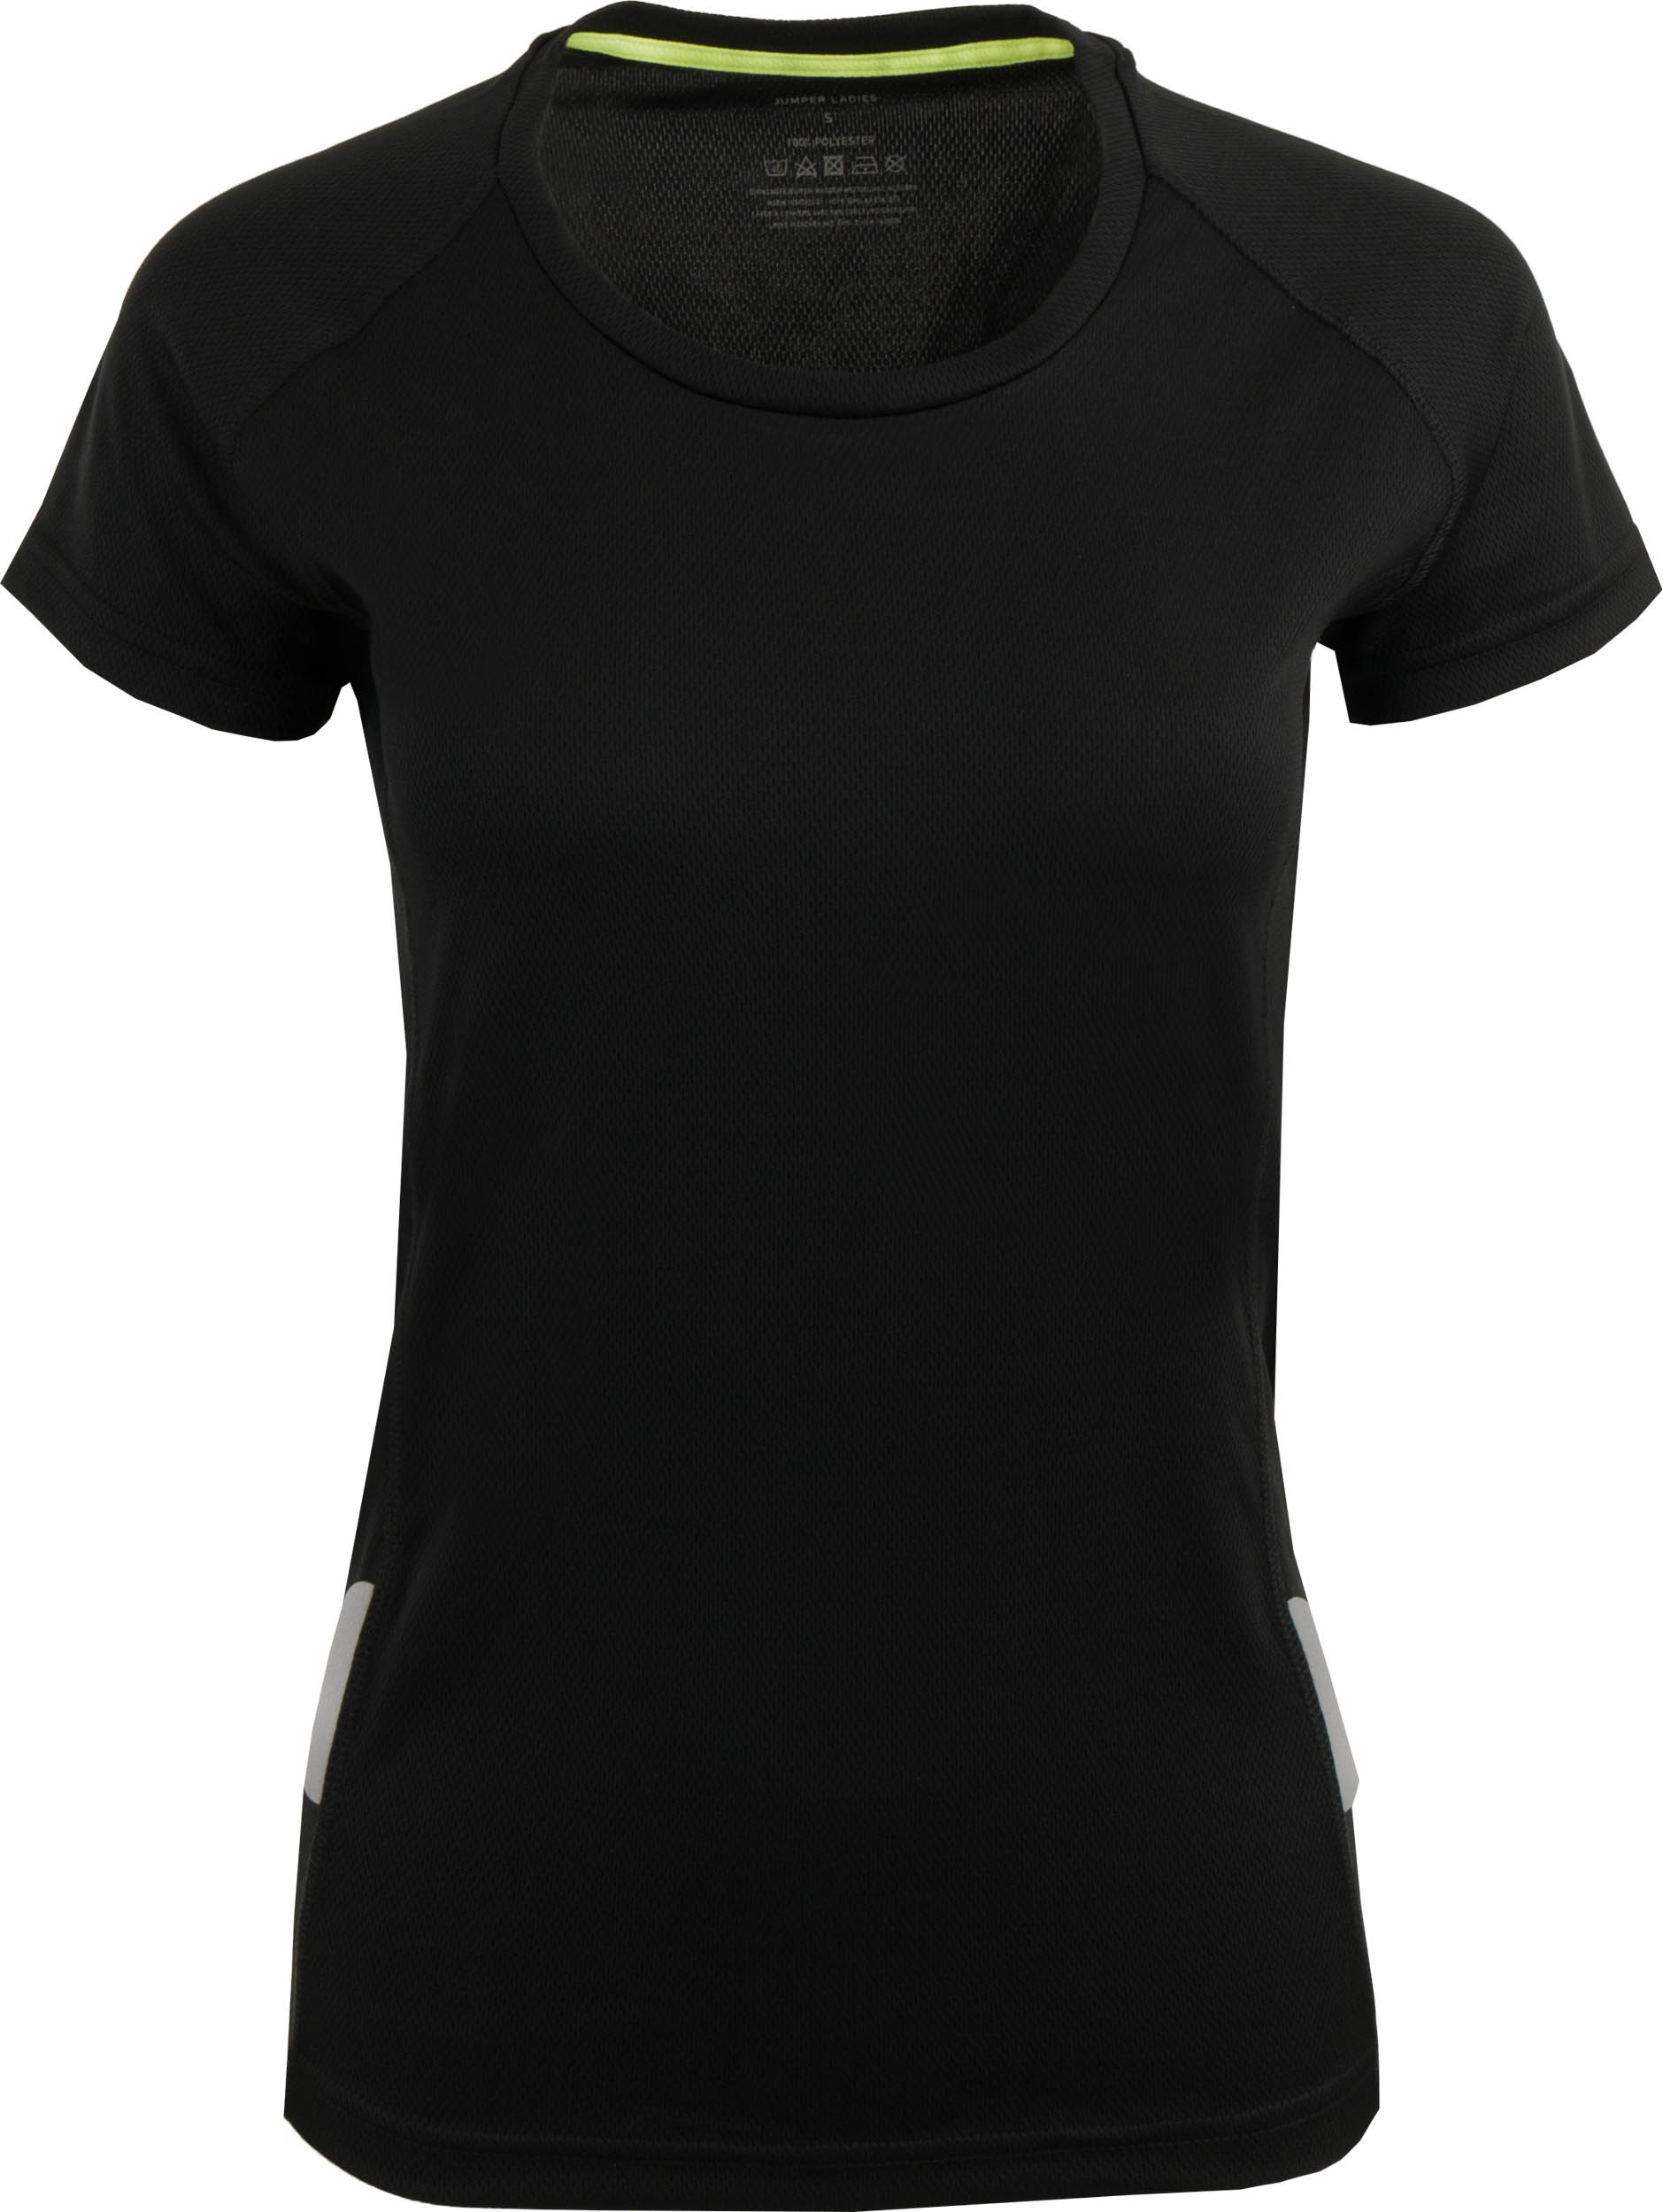 Sportovní triko JUMPER Ladies black|XS